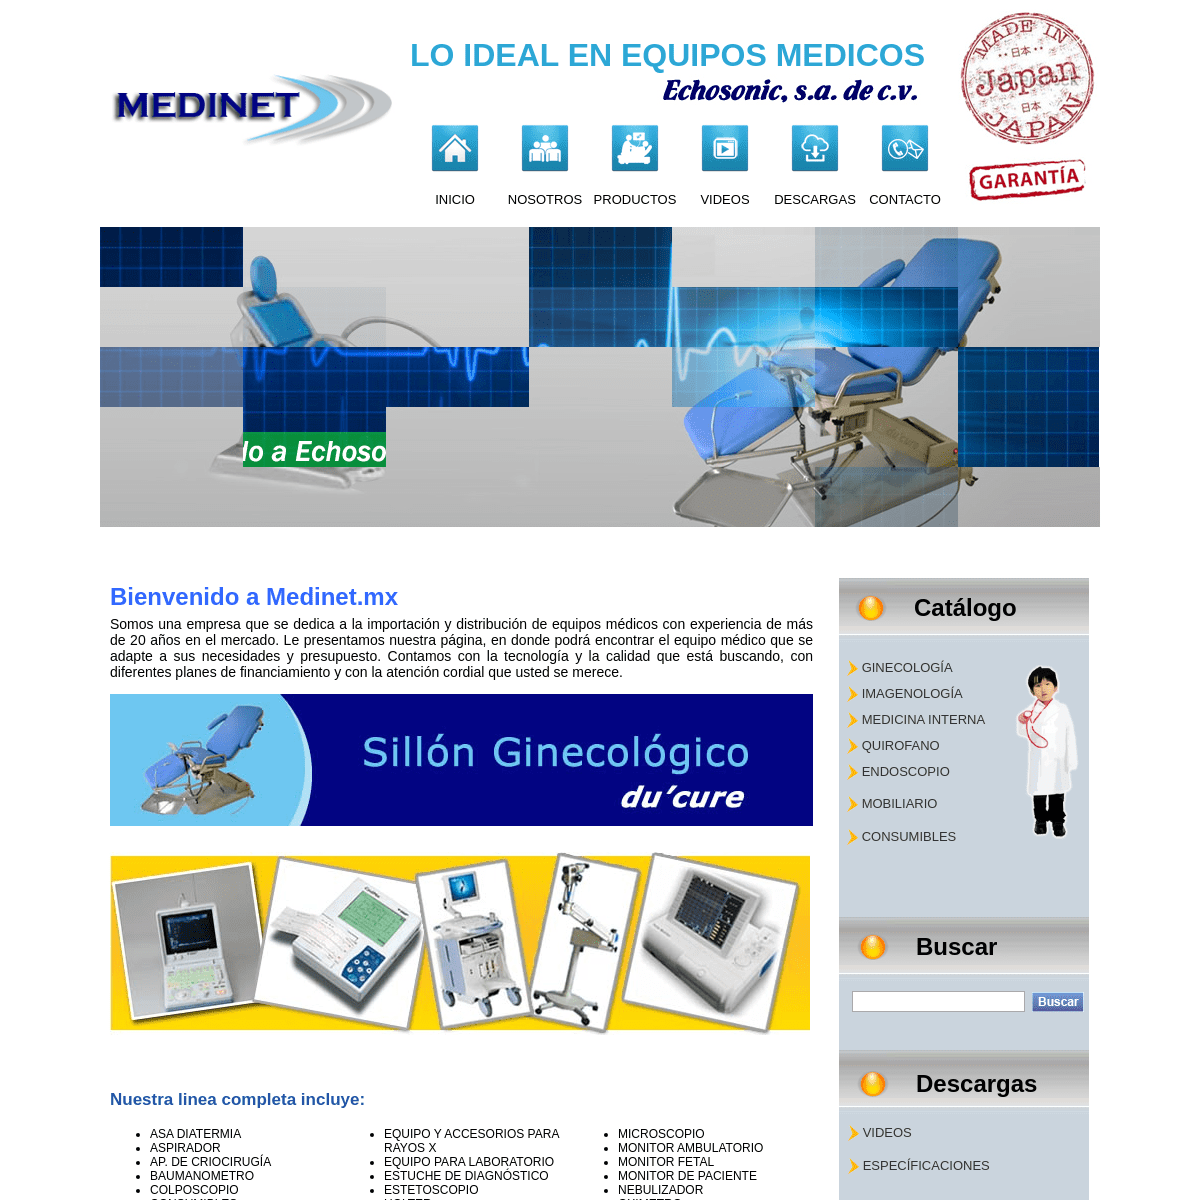 A complete backup of medinet.mx